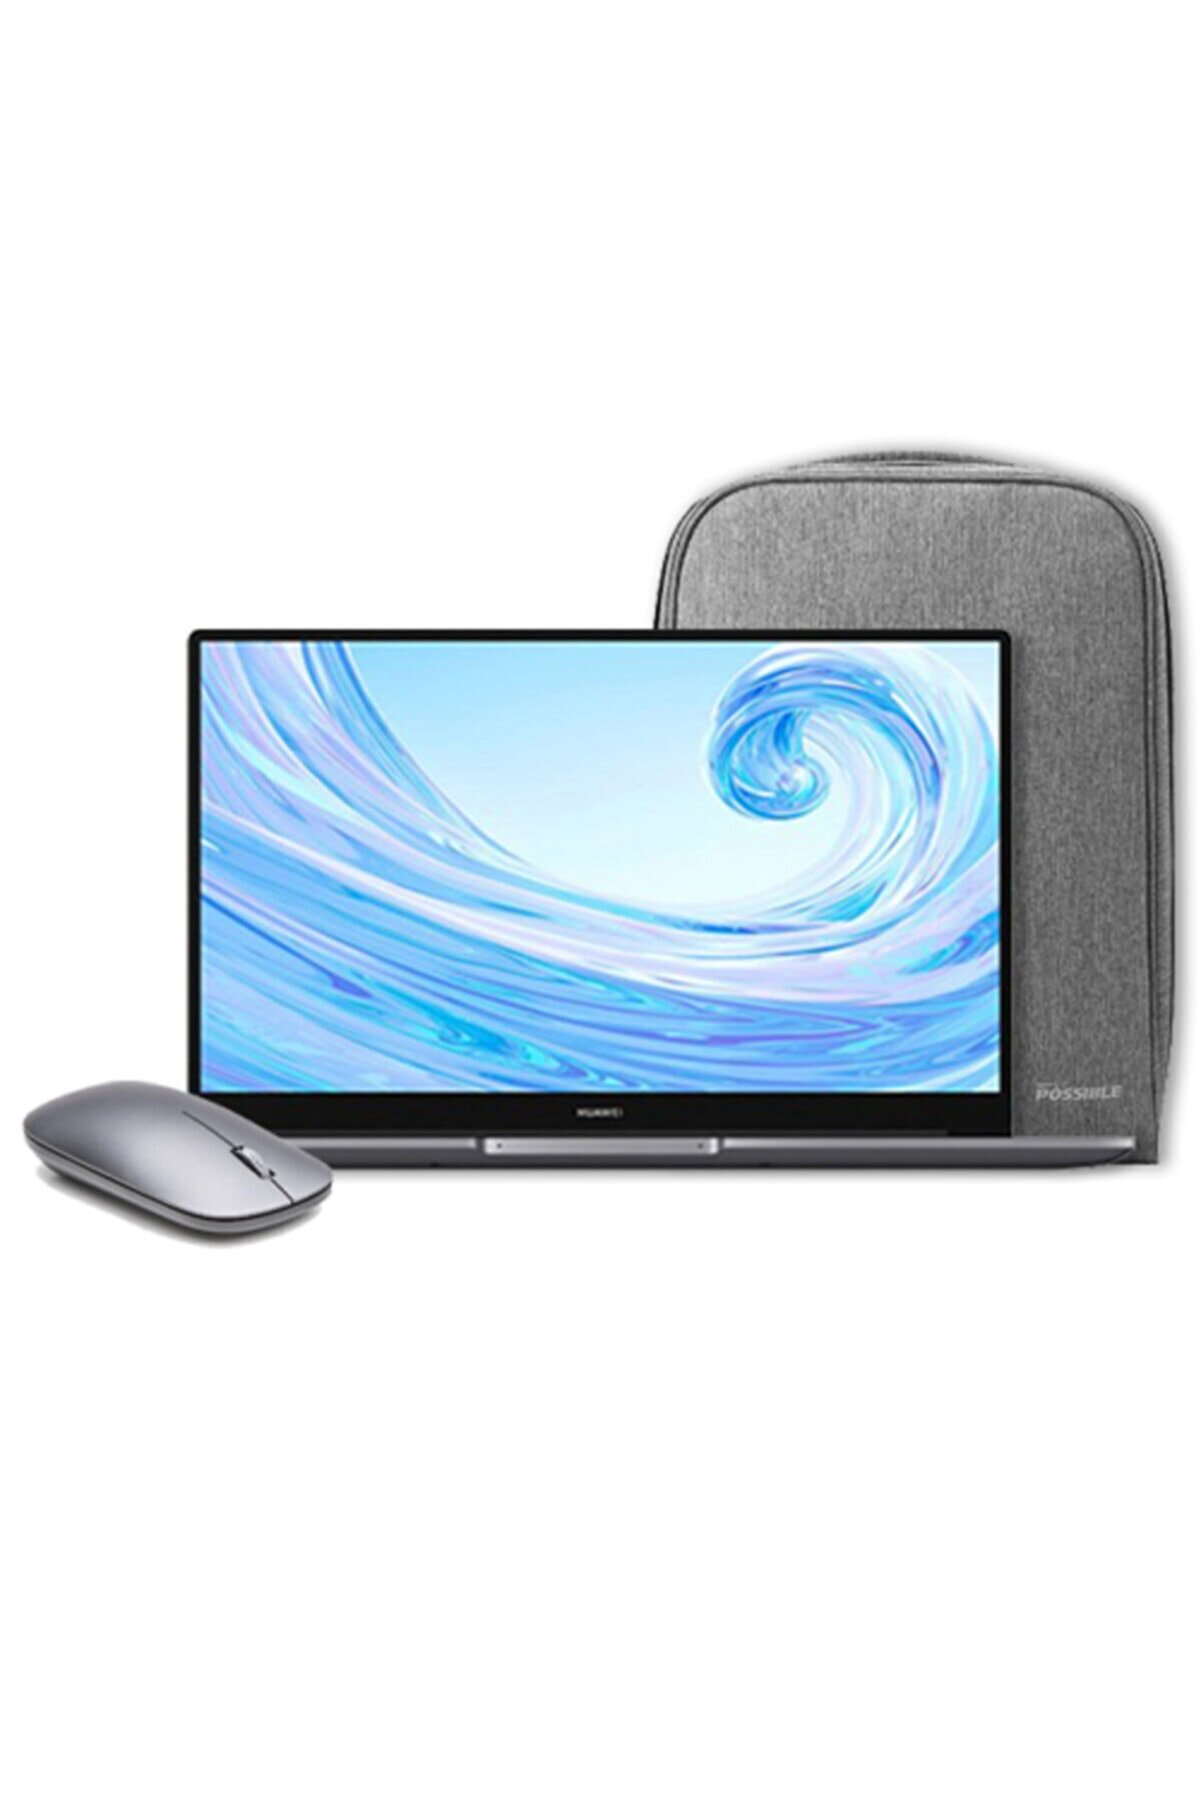 Huawei Matebook D15 I3 10110u 8gb 256gb Ssd W10 Home 15.6" Fhd + Notebook Çantası Ve Mouse